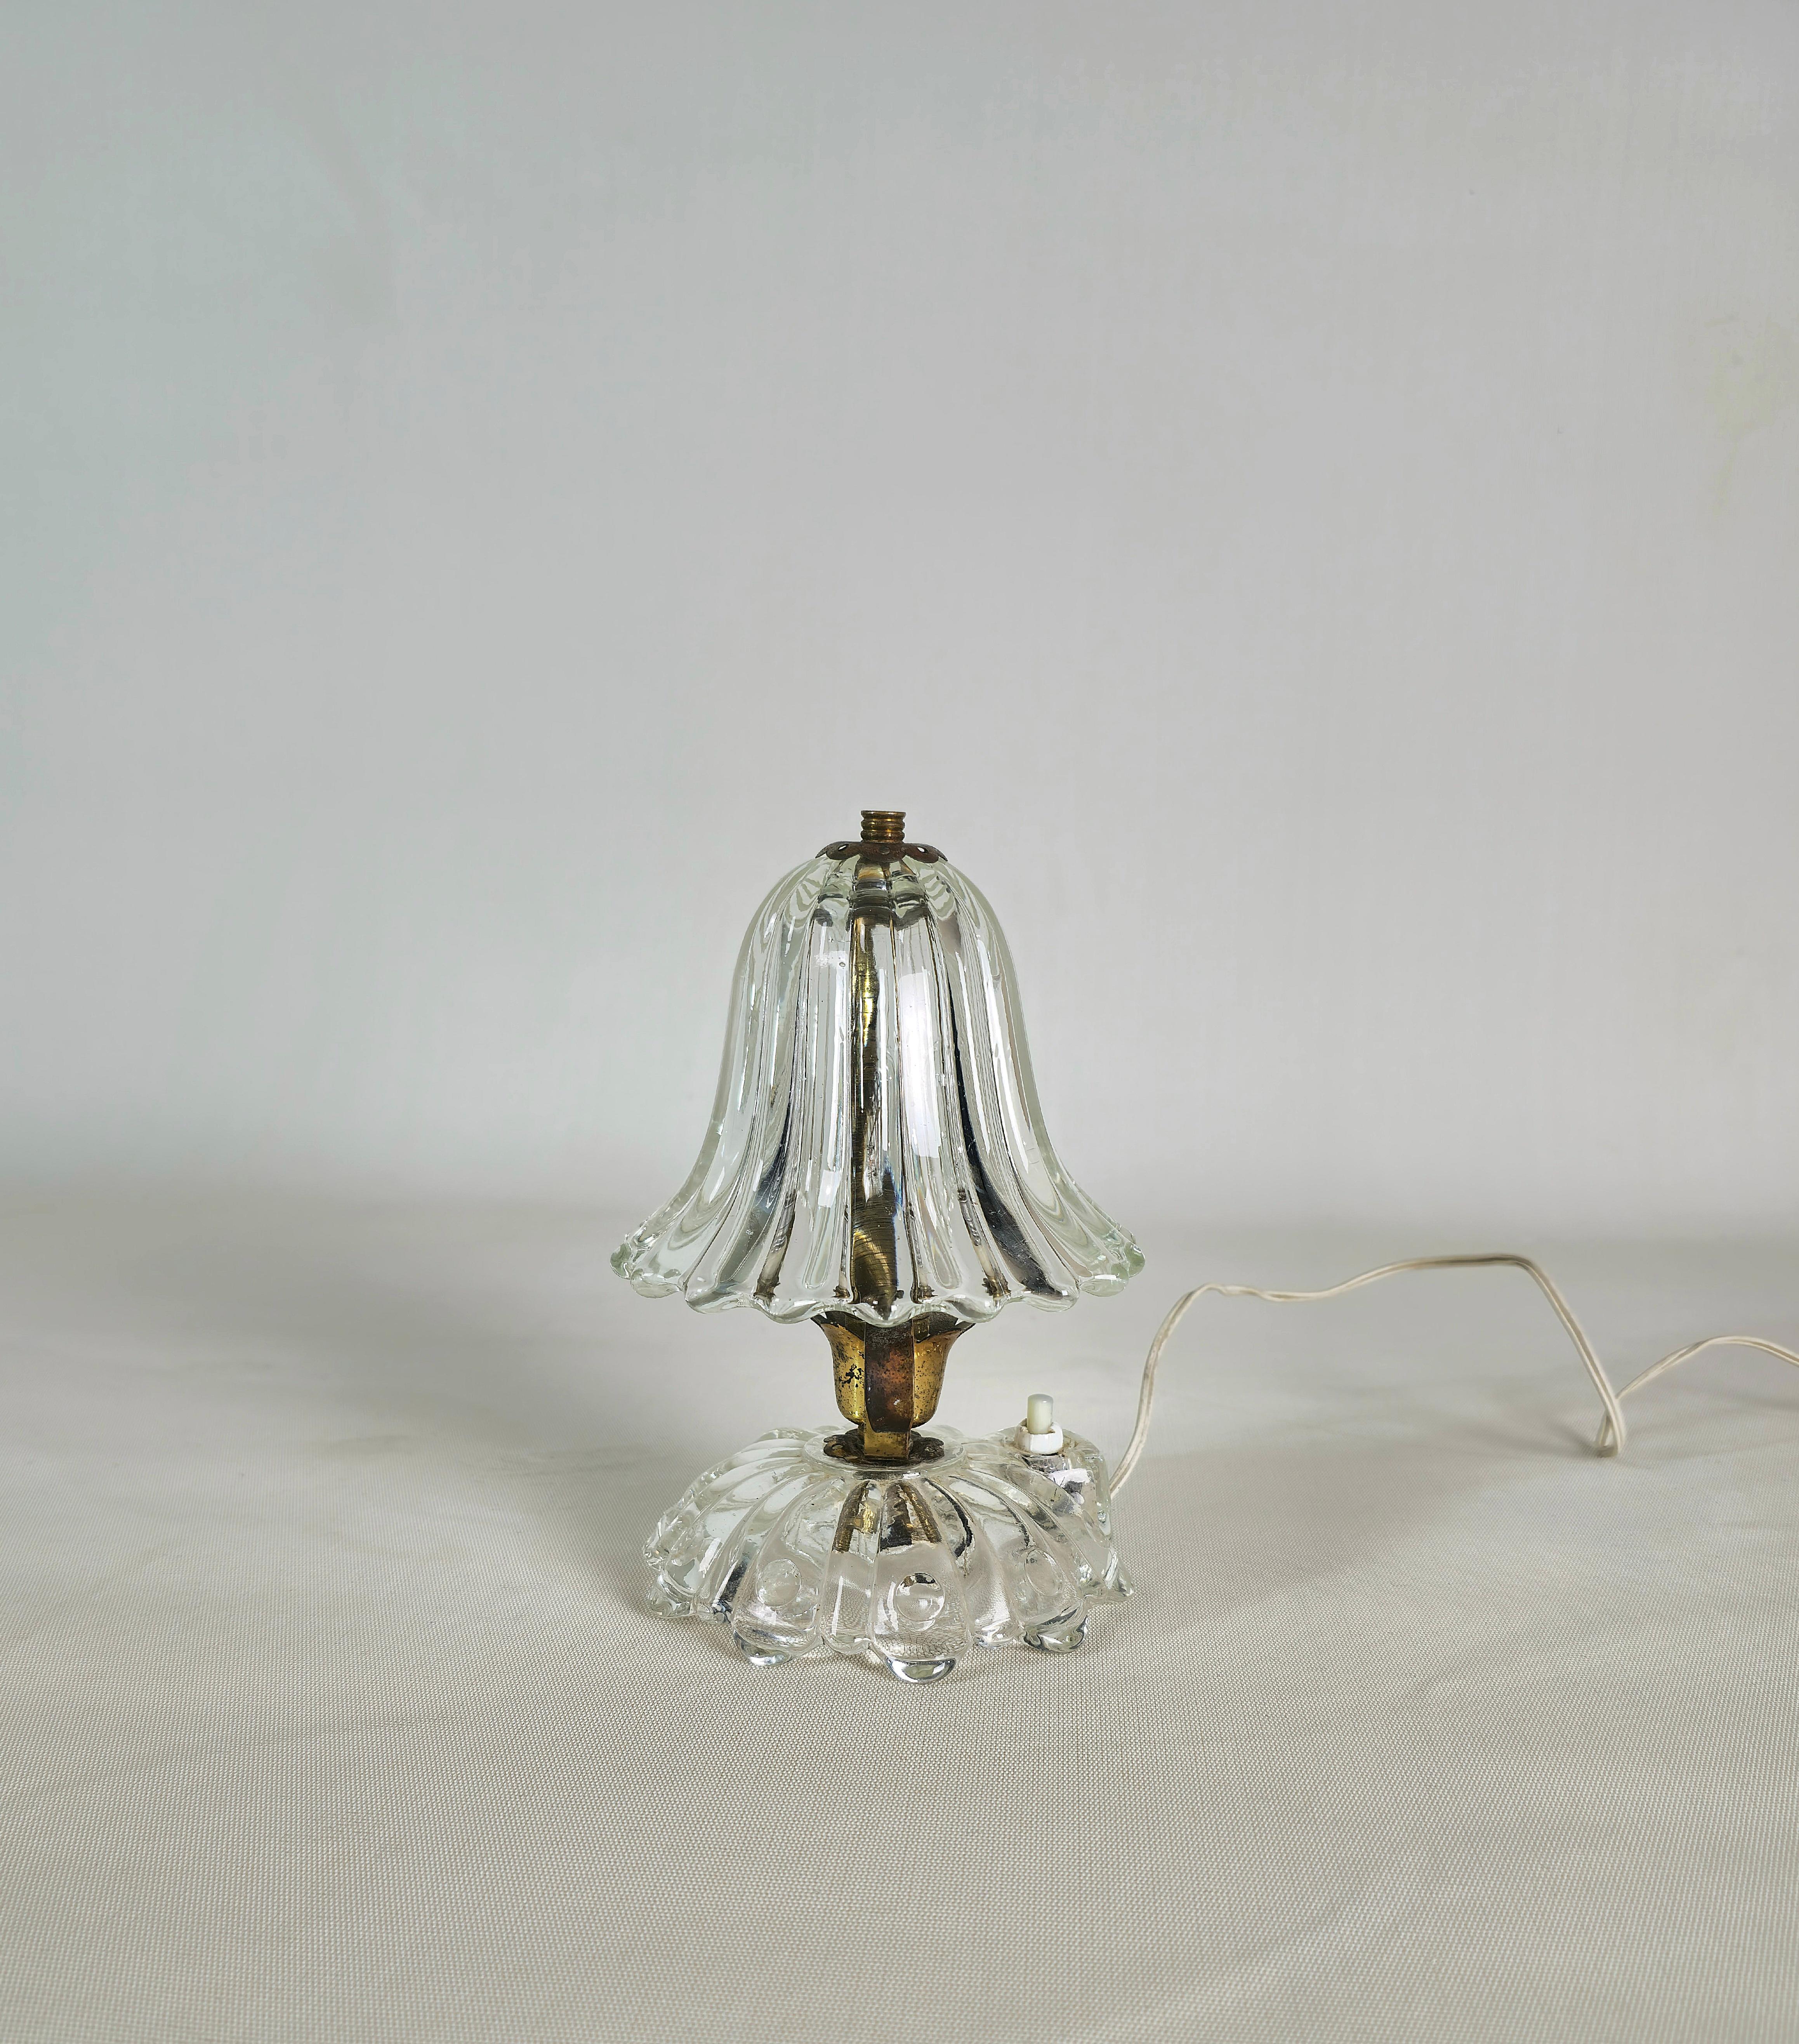  Table Lamp Murano Glass Brass Barovier&Toso Midcentury Italian Design 1940s For Sale 2